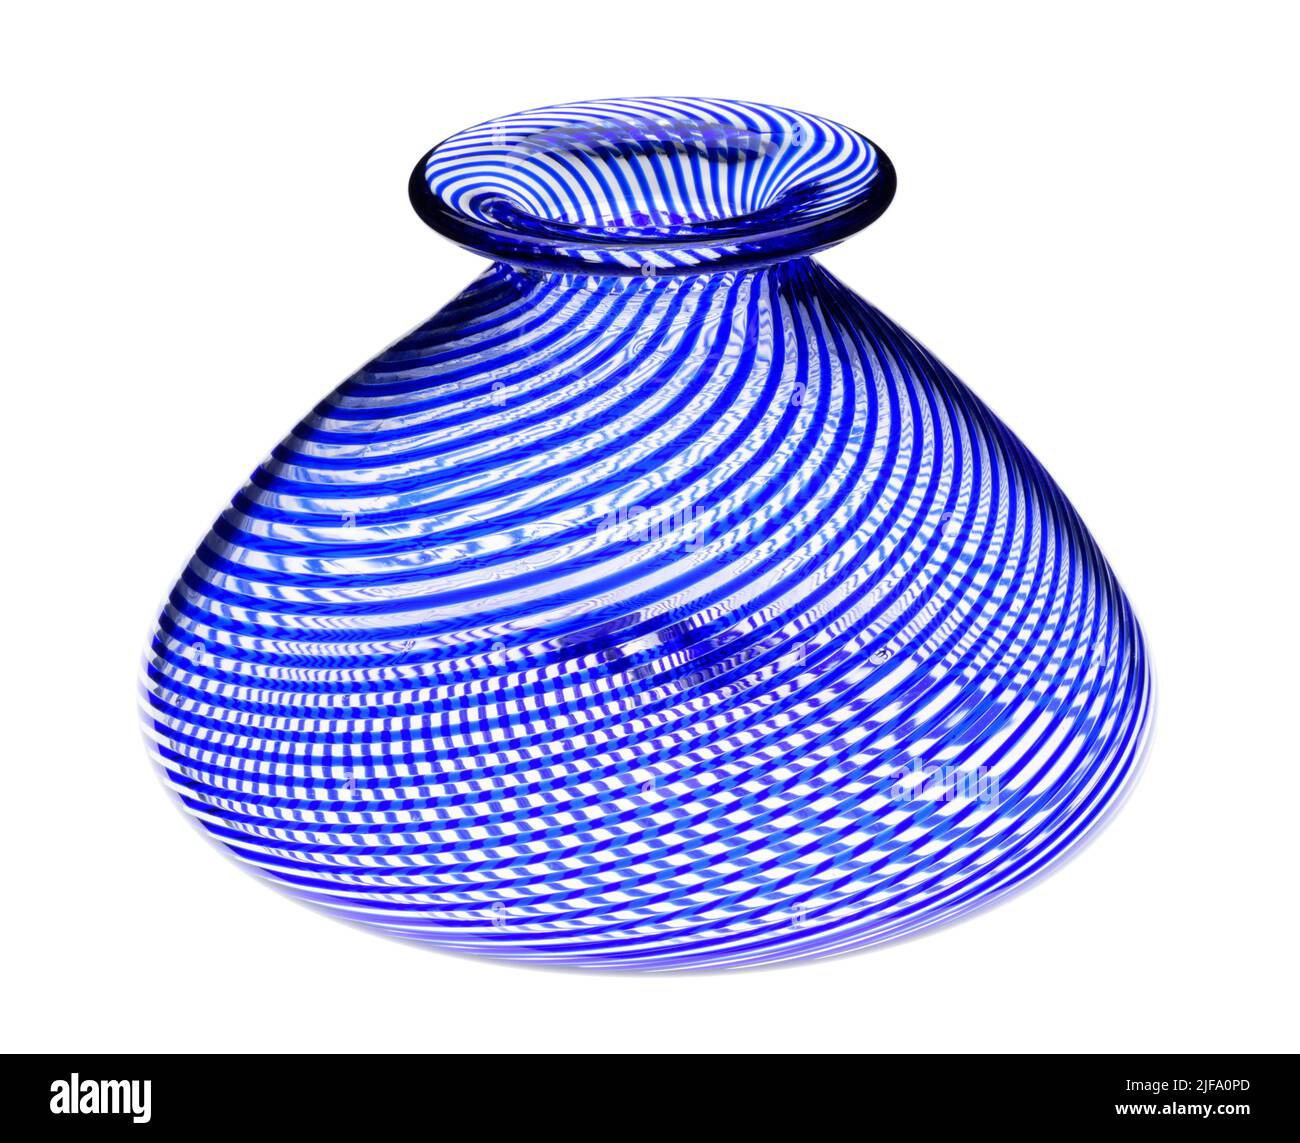 Glassware vase. A small blue striped glass vase or vessel. Stock Photo